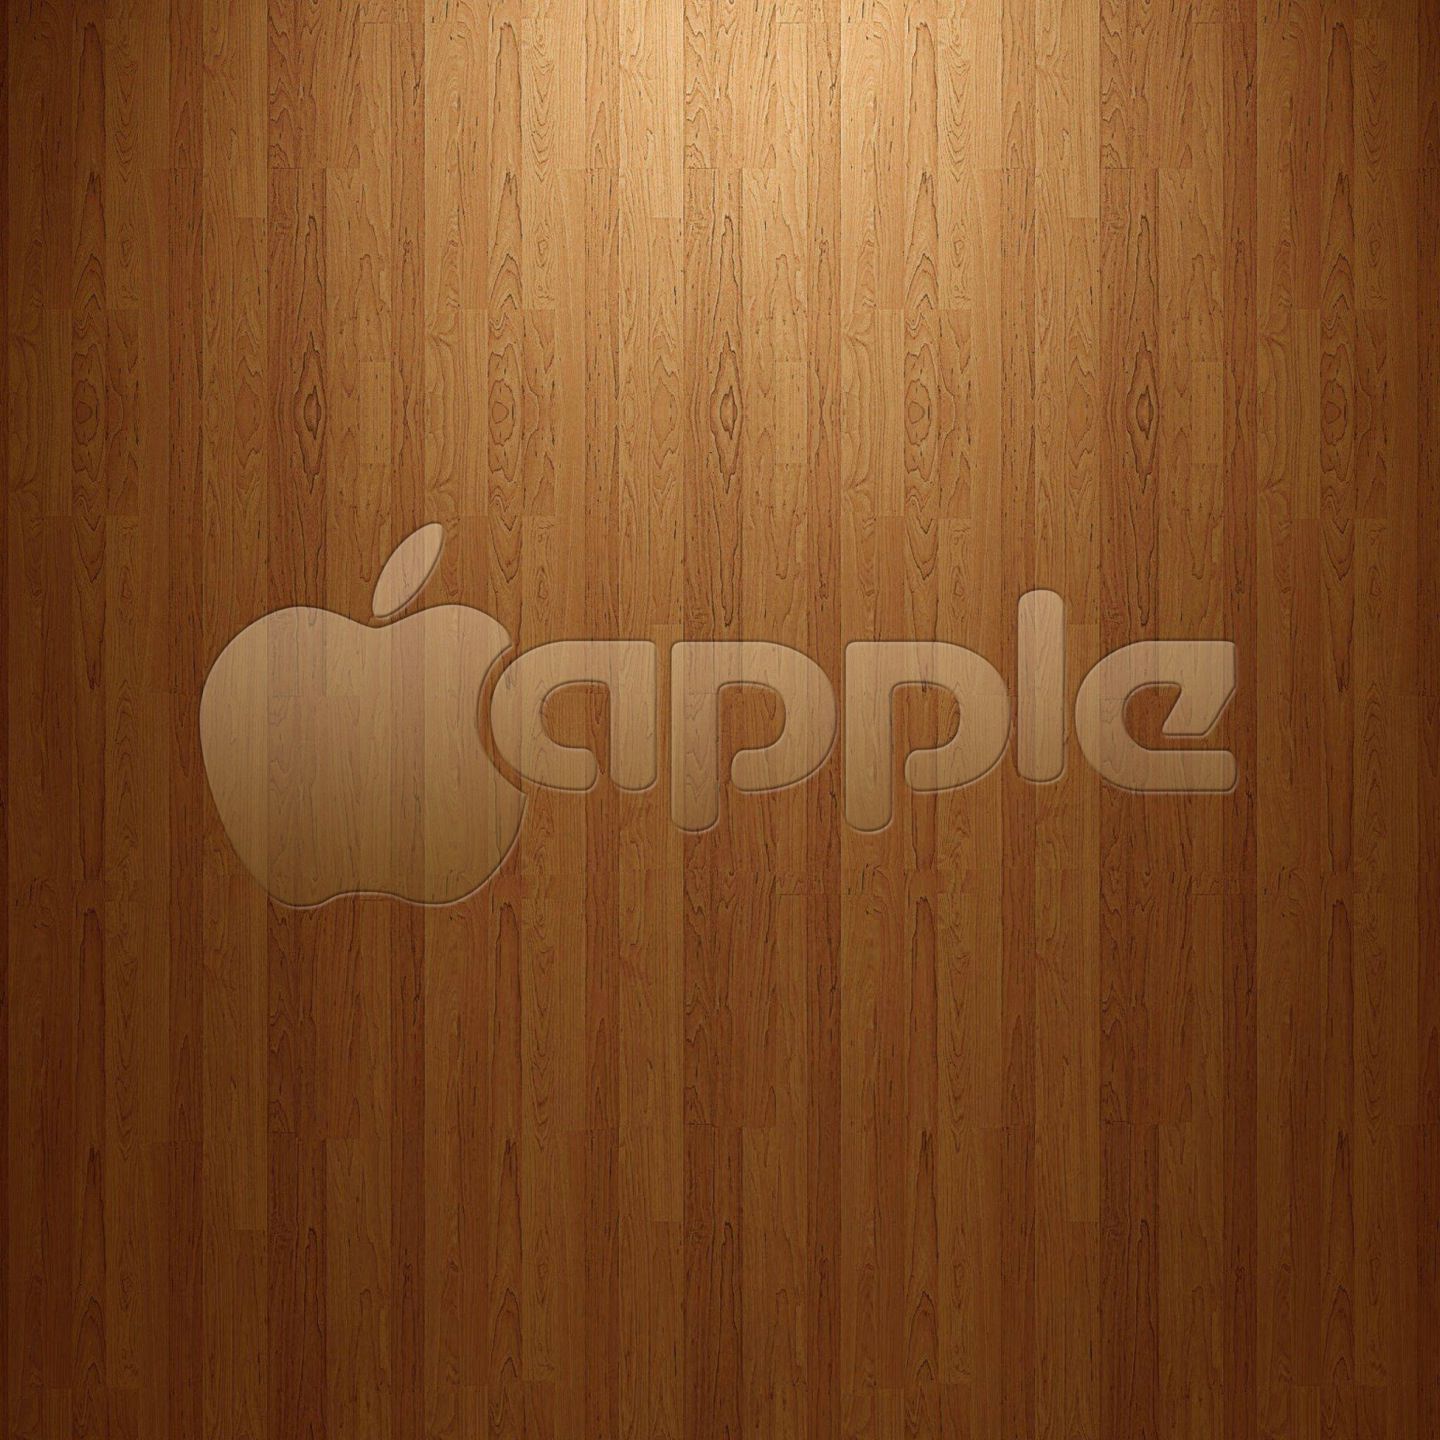 Apple wood | wallpaper.sc SmartPhone